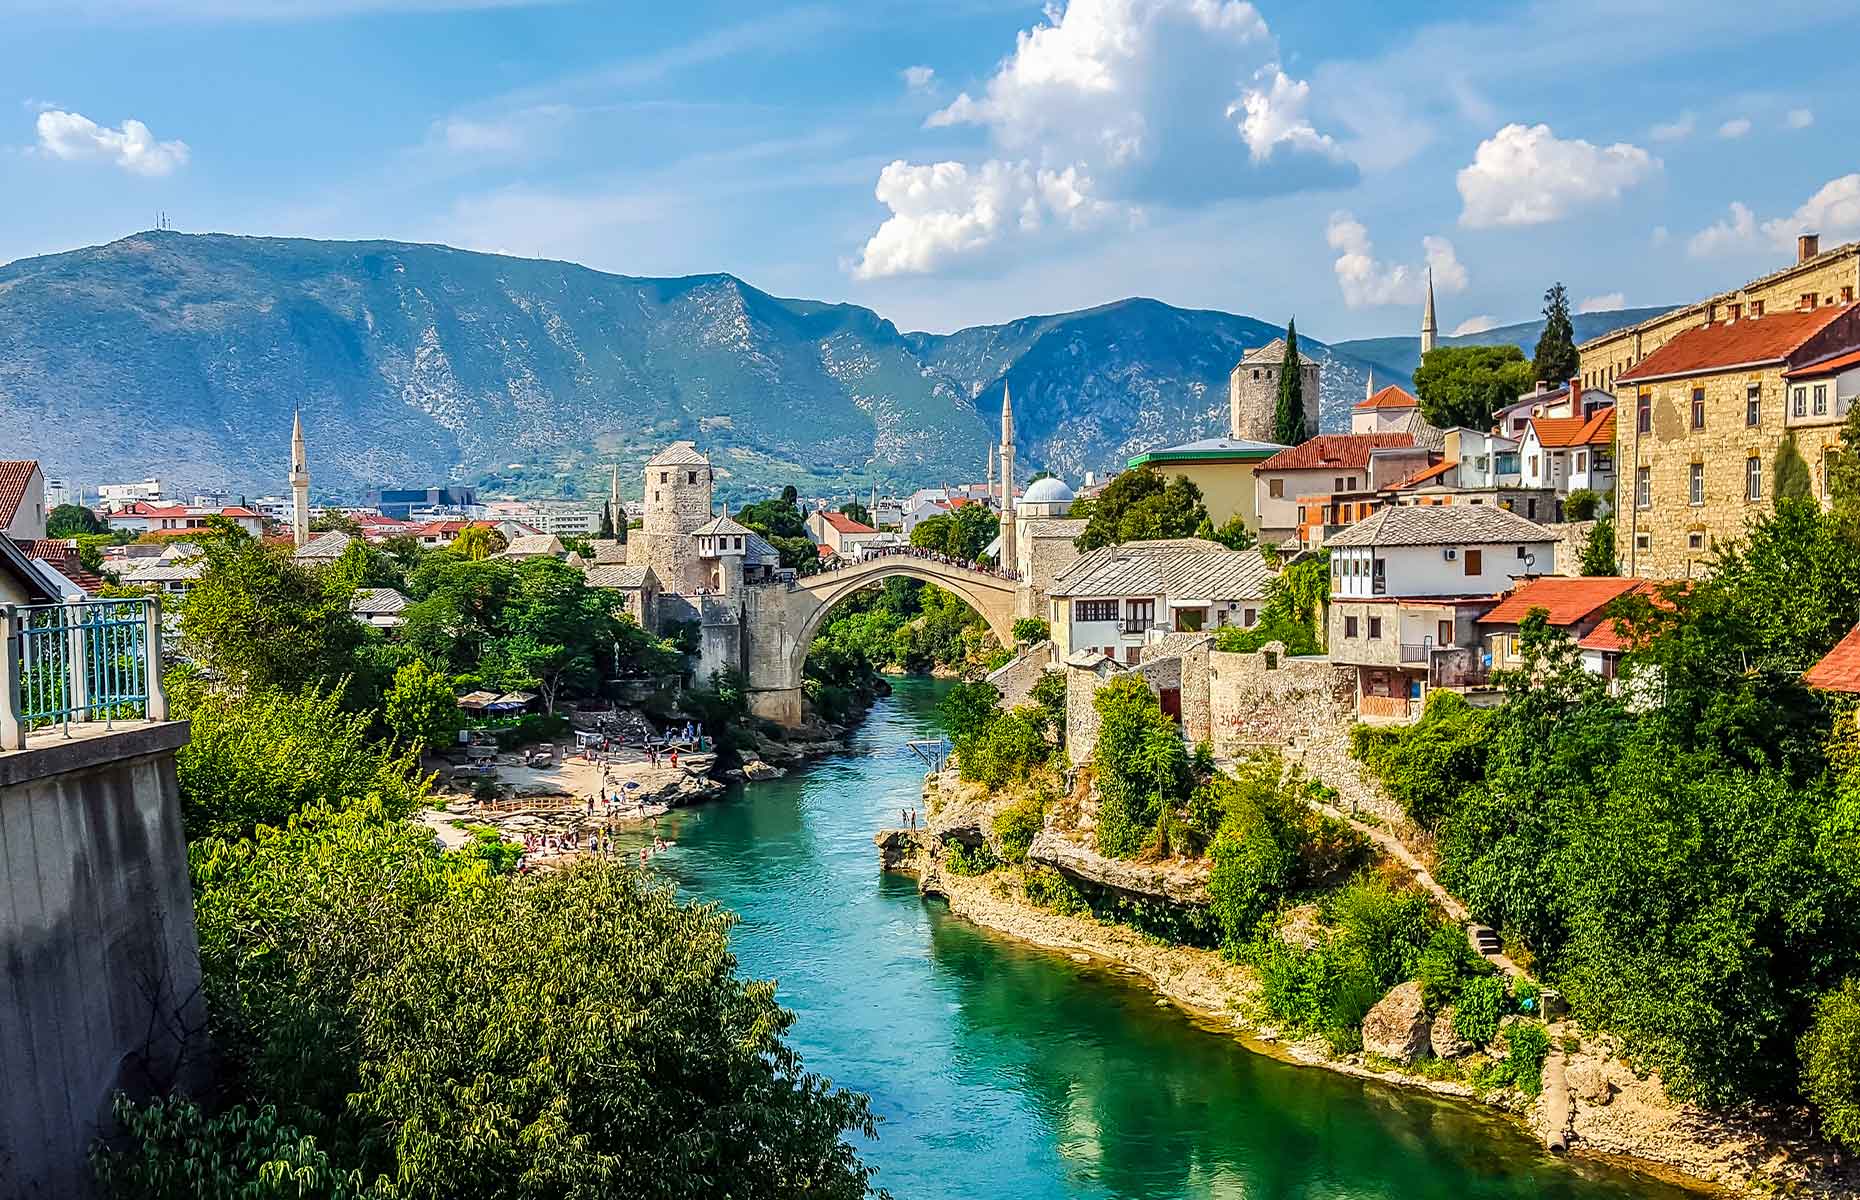 Mostar, Bosnia (Image: Zabotnova Inna/Shutterstock)